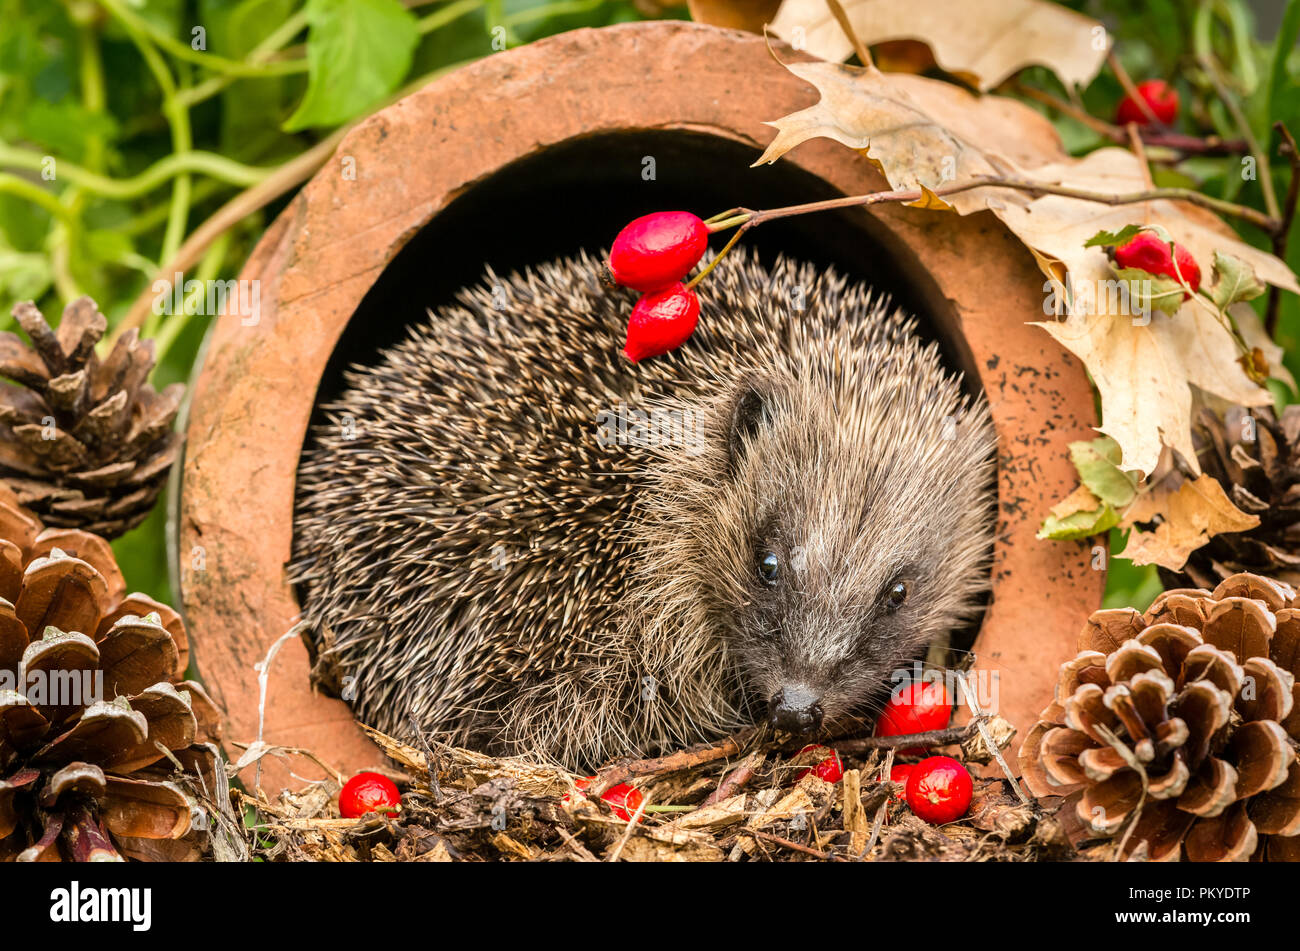 Hedgehog Wild Native European Hedgehog In Natural Habitat In Autumn